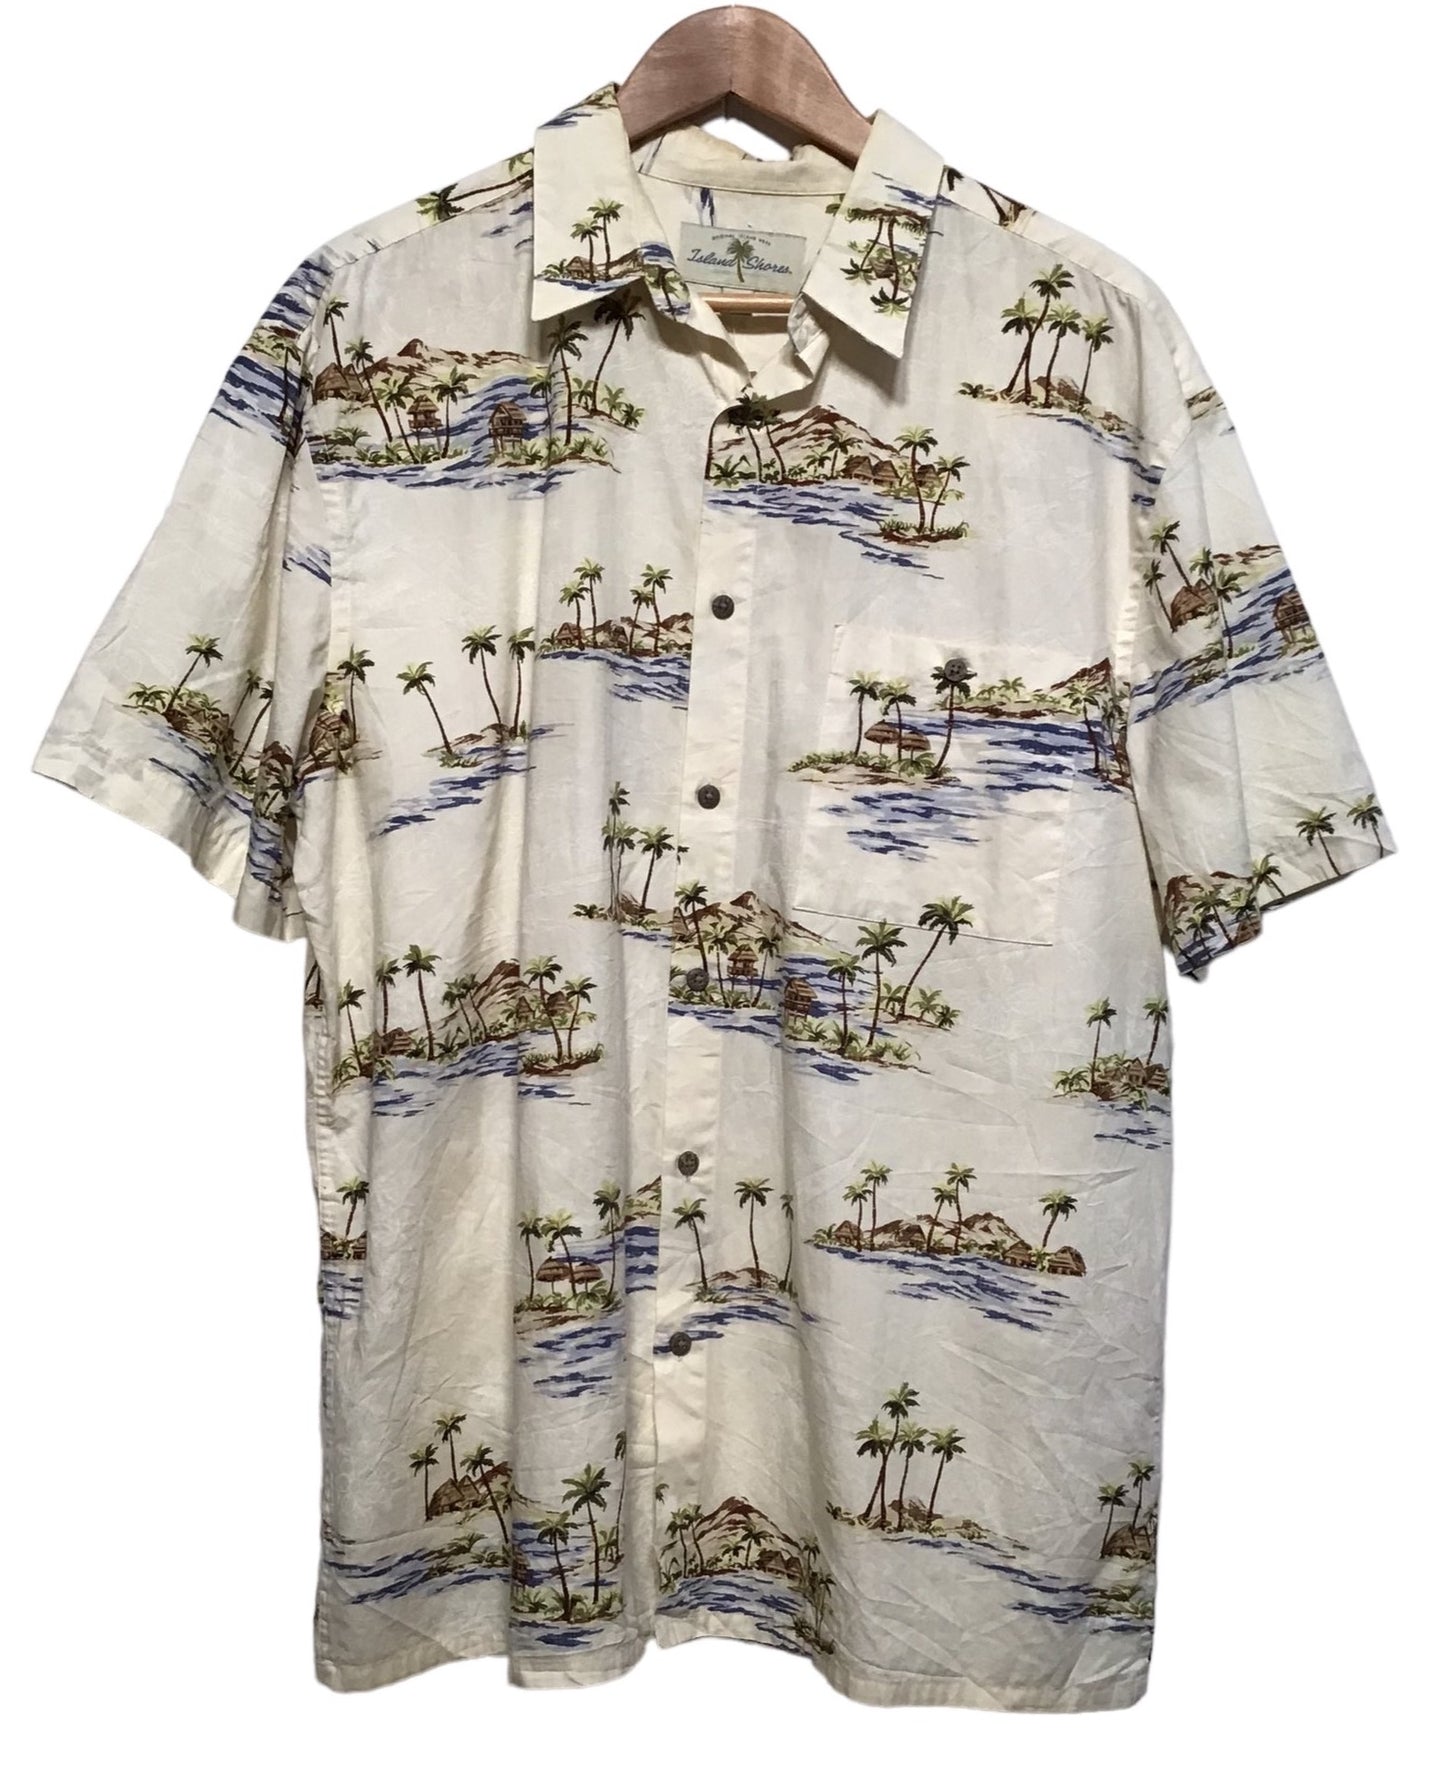 Island Shores Shirt (Size L)